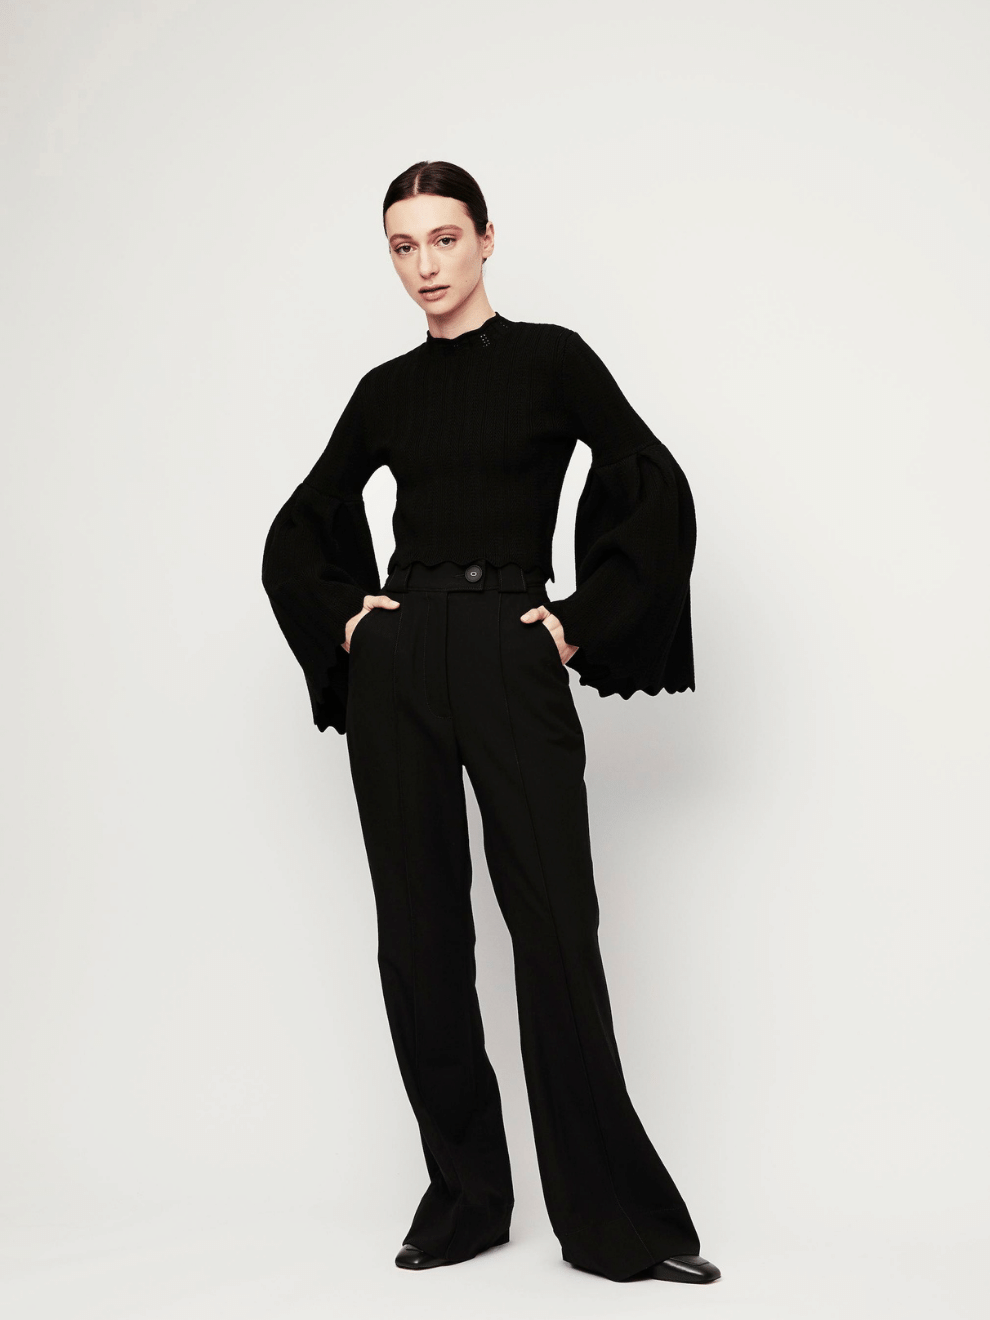 Chloe Knit Top in Black